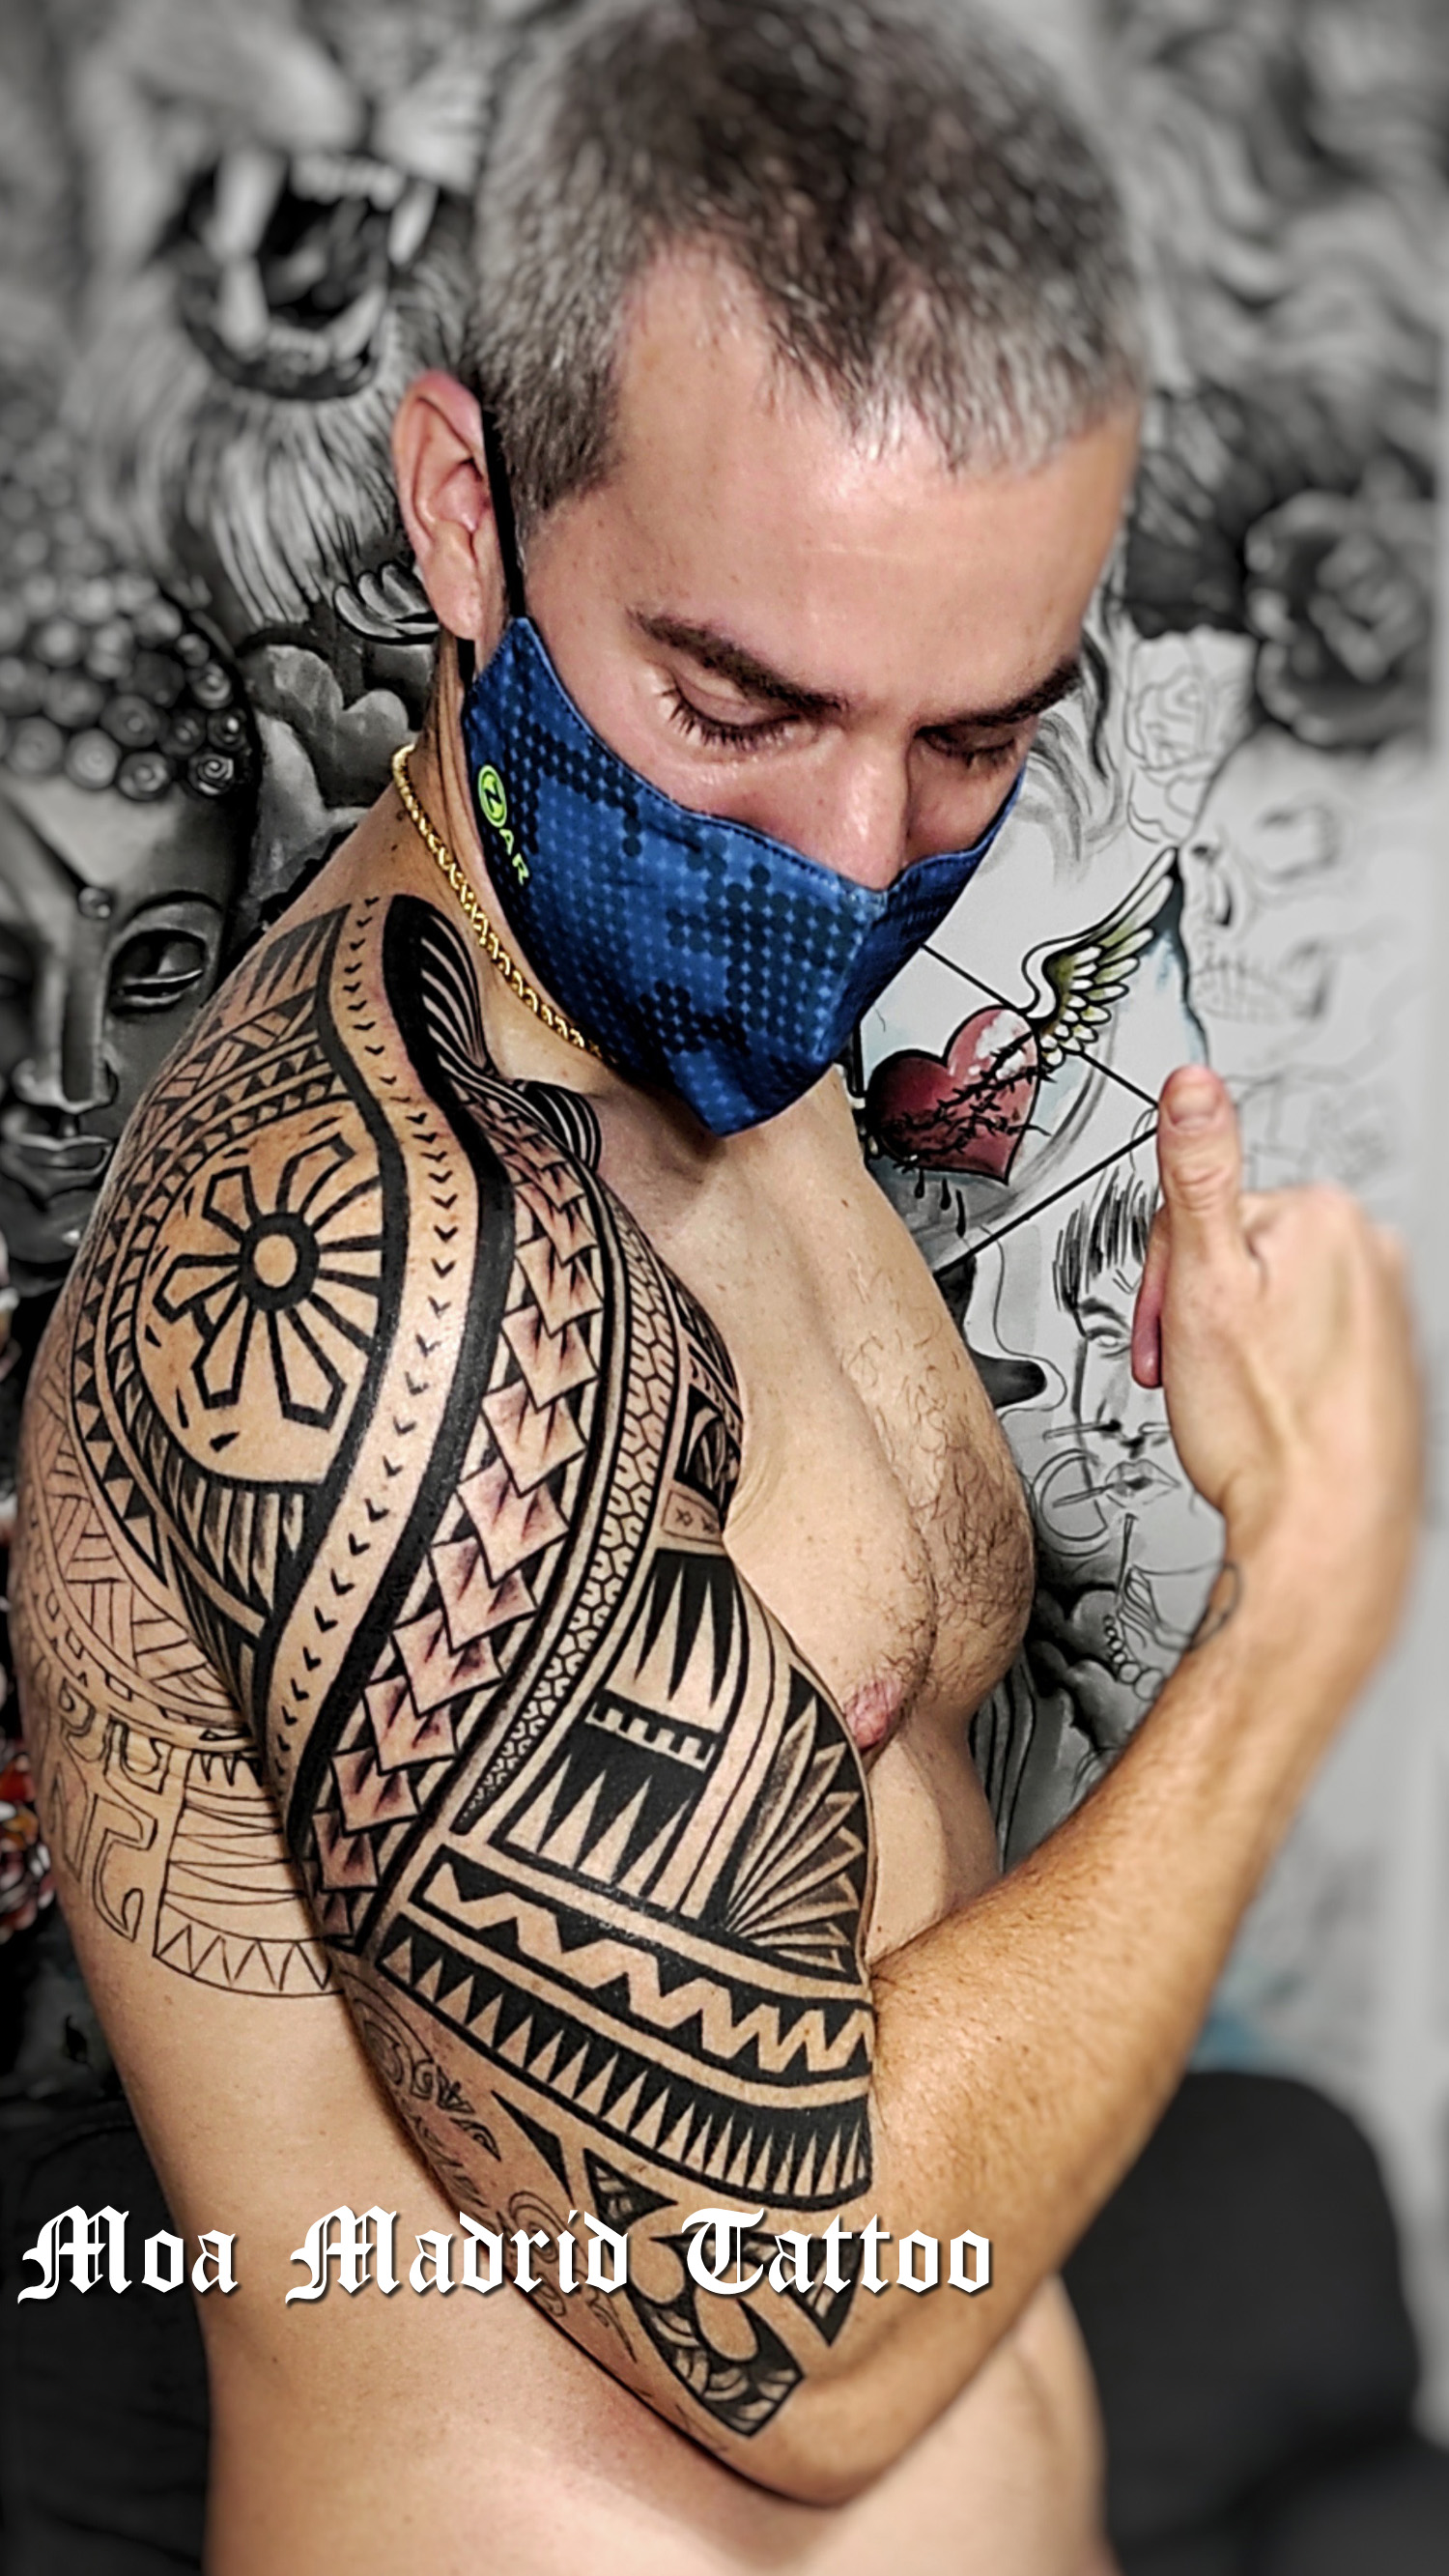 Tatuaje samoano diseñado y realizado en Madrid